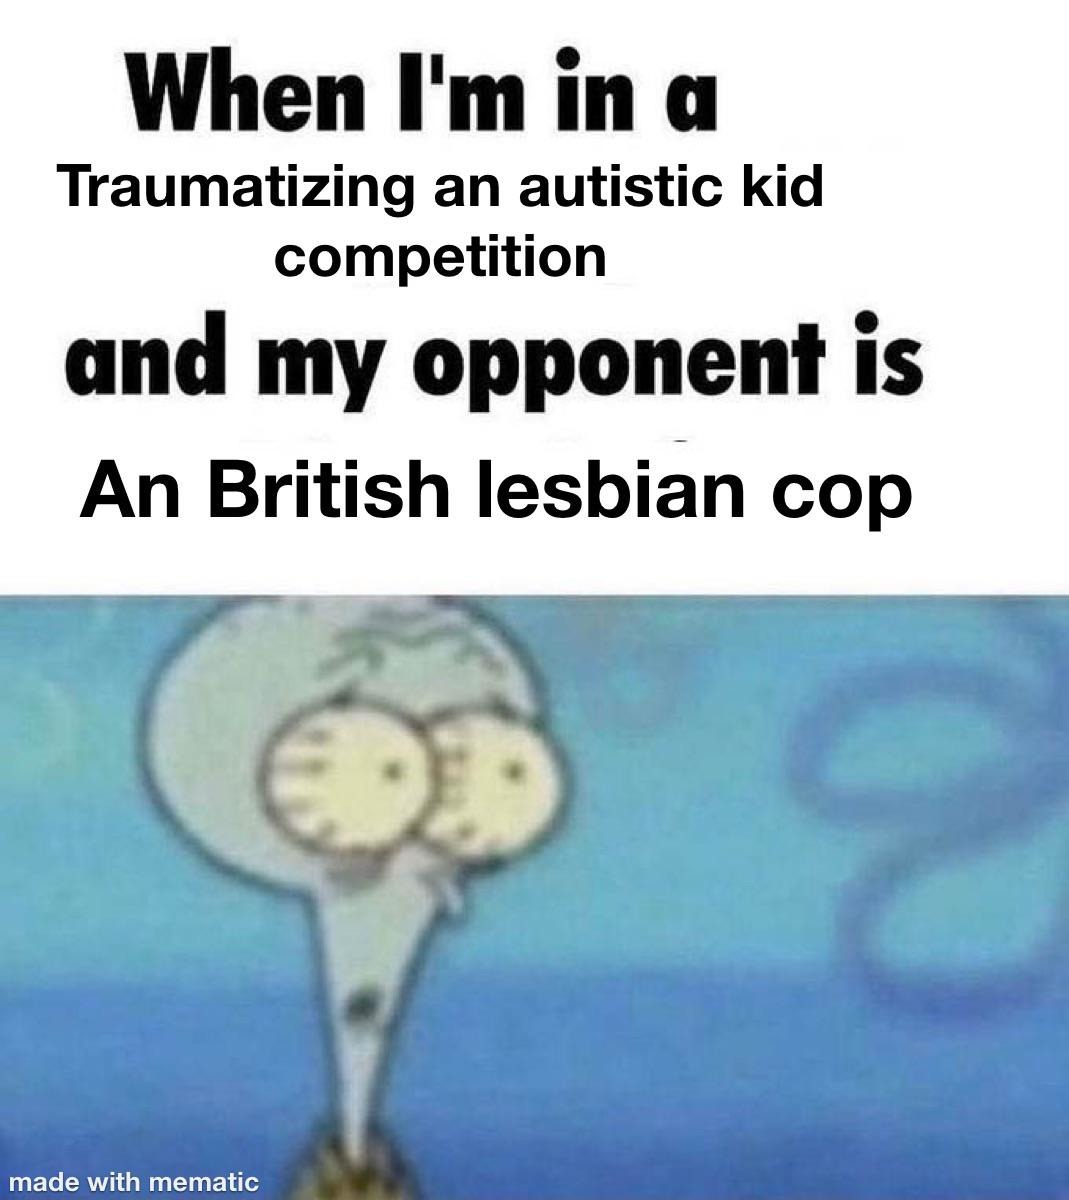 Bristish lesbian cop - meme